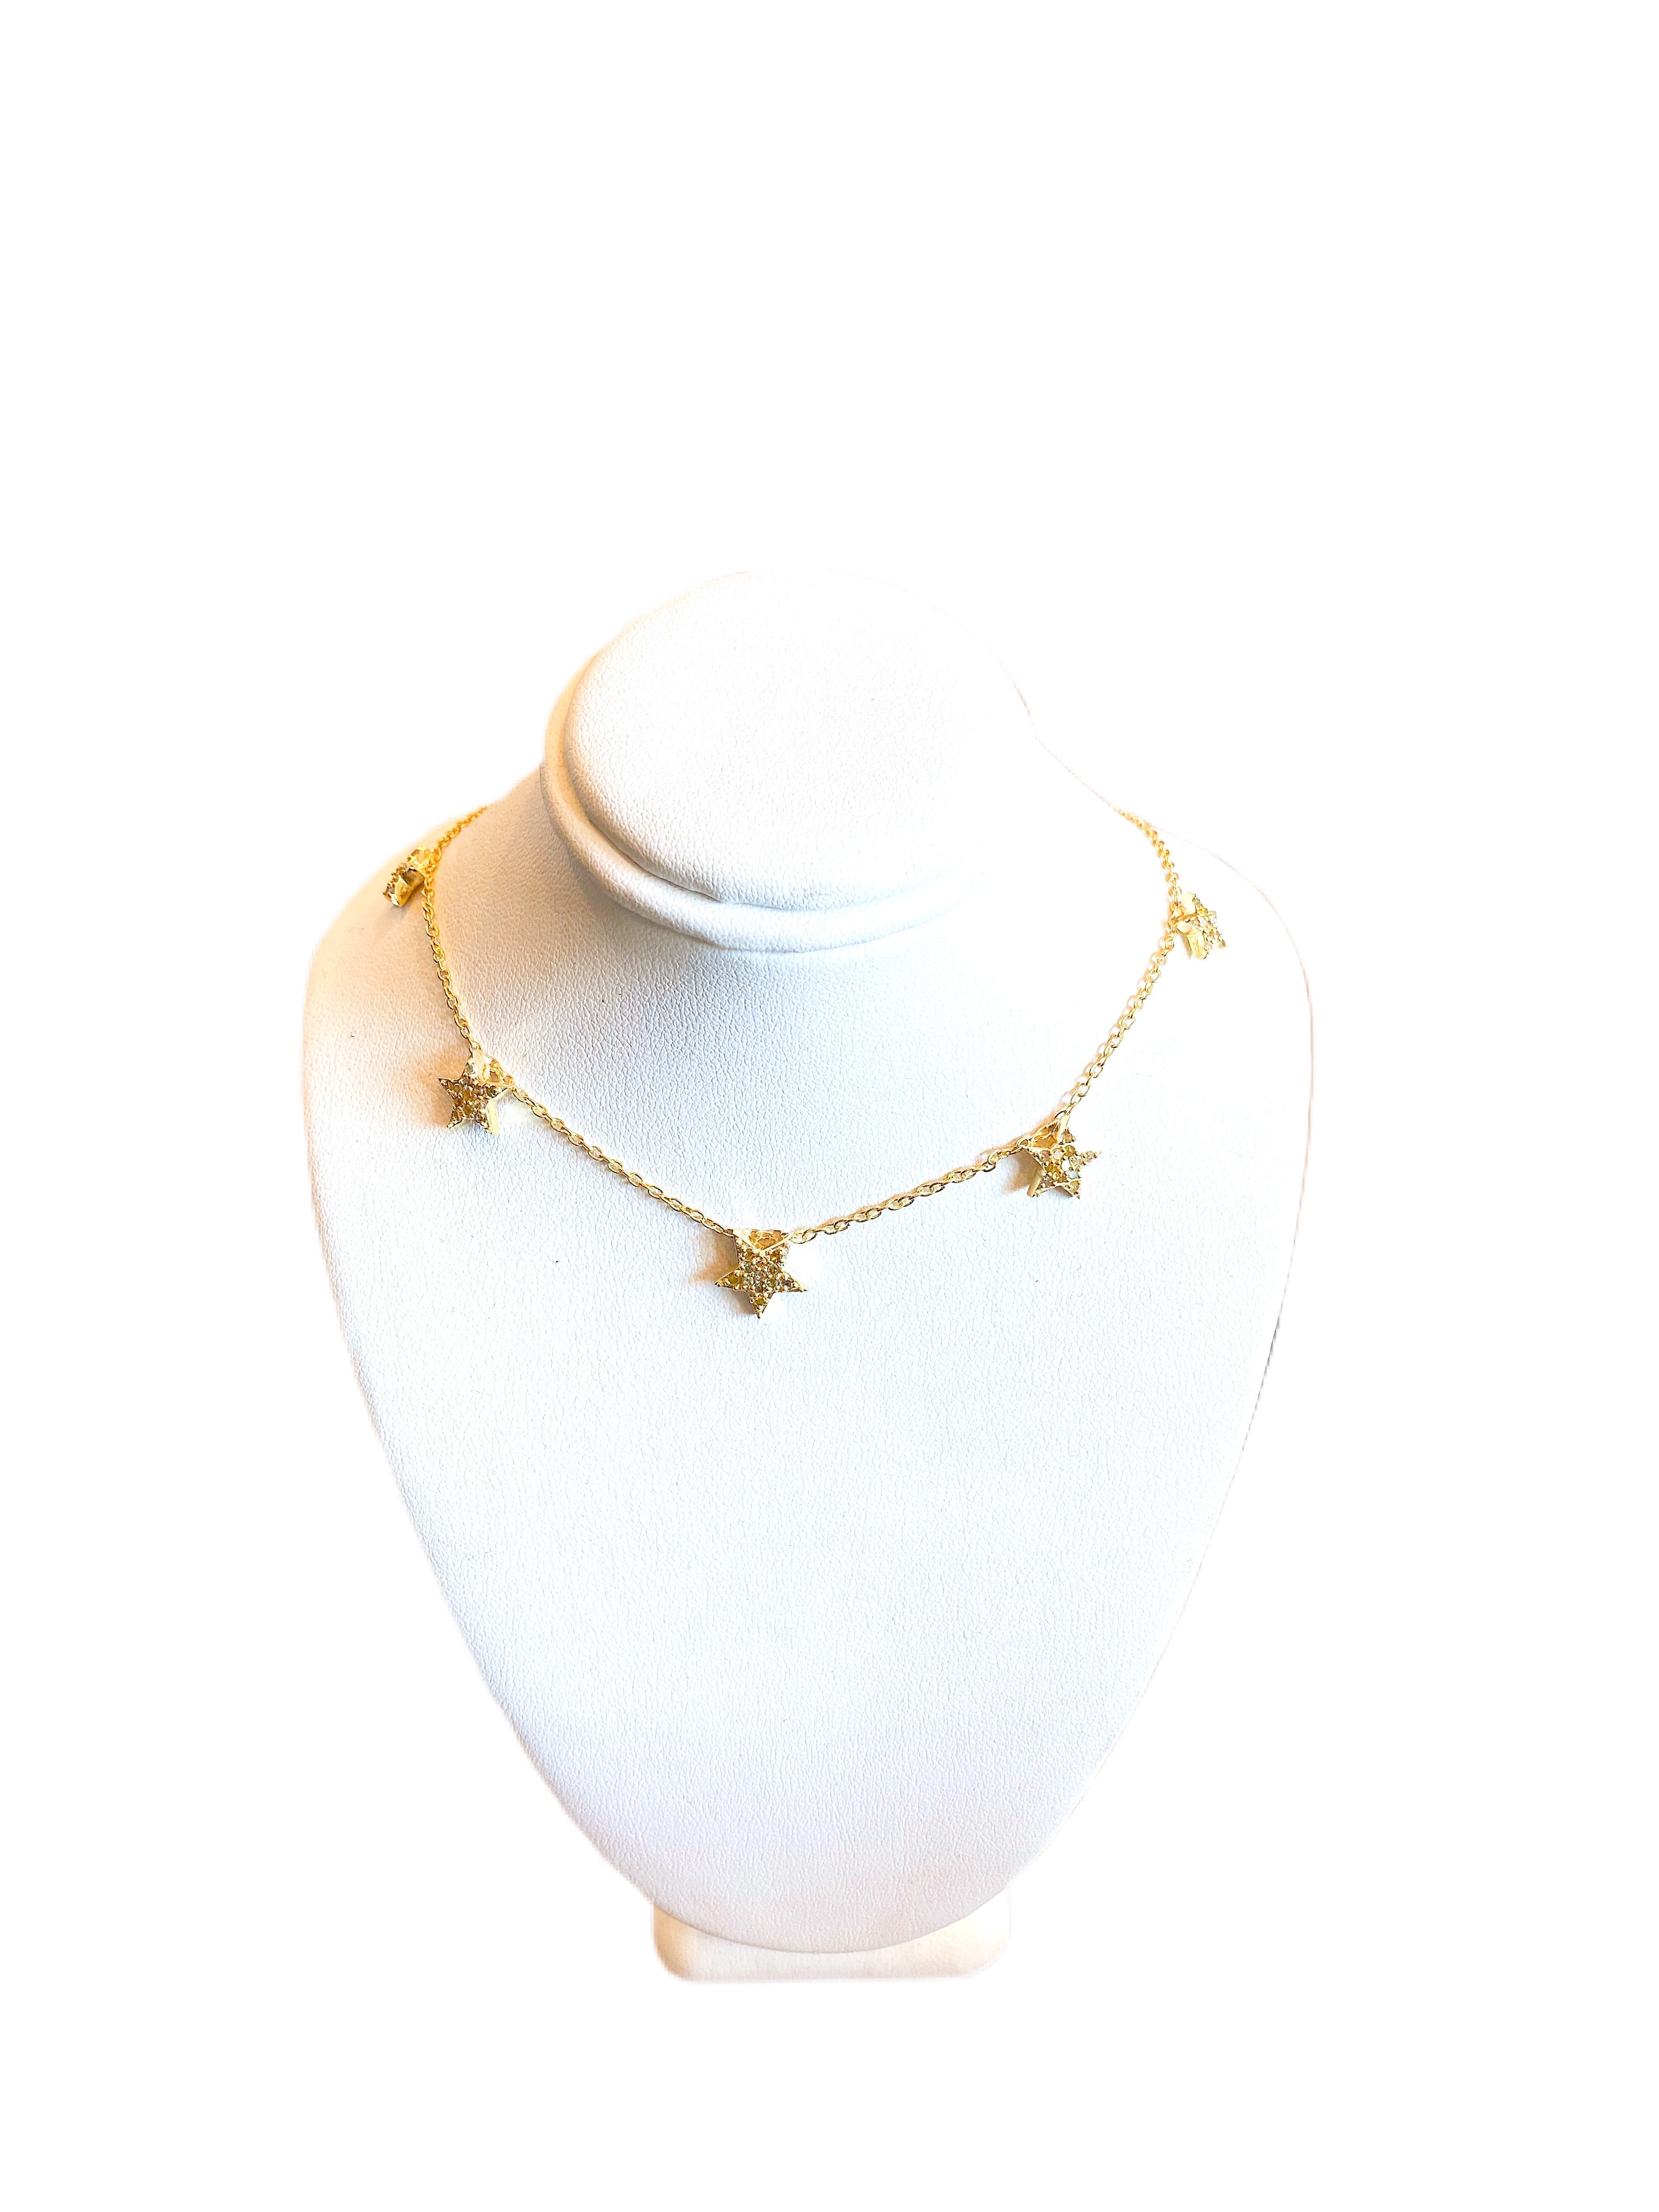 S.Row Designs Five Star Diamond Necklace